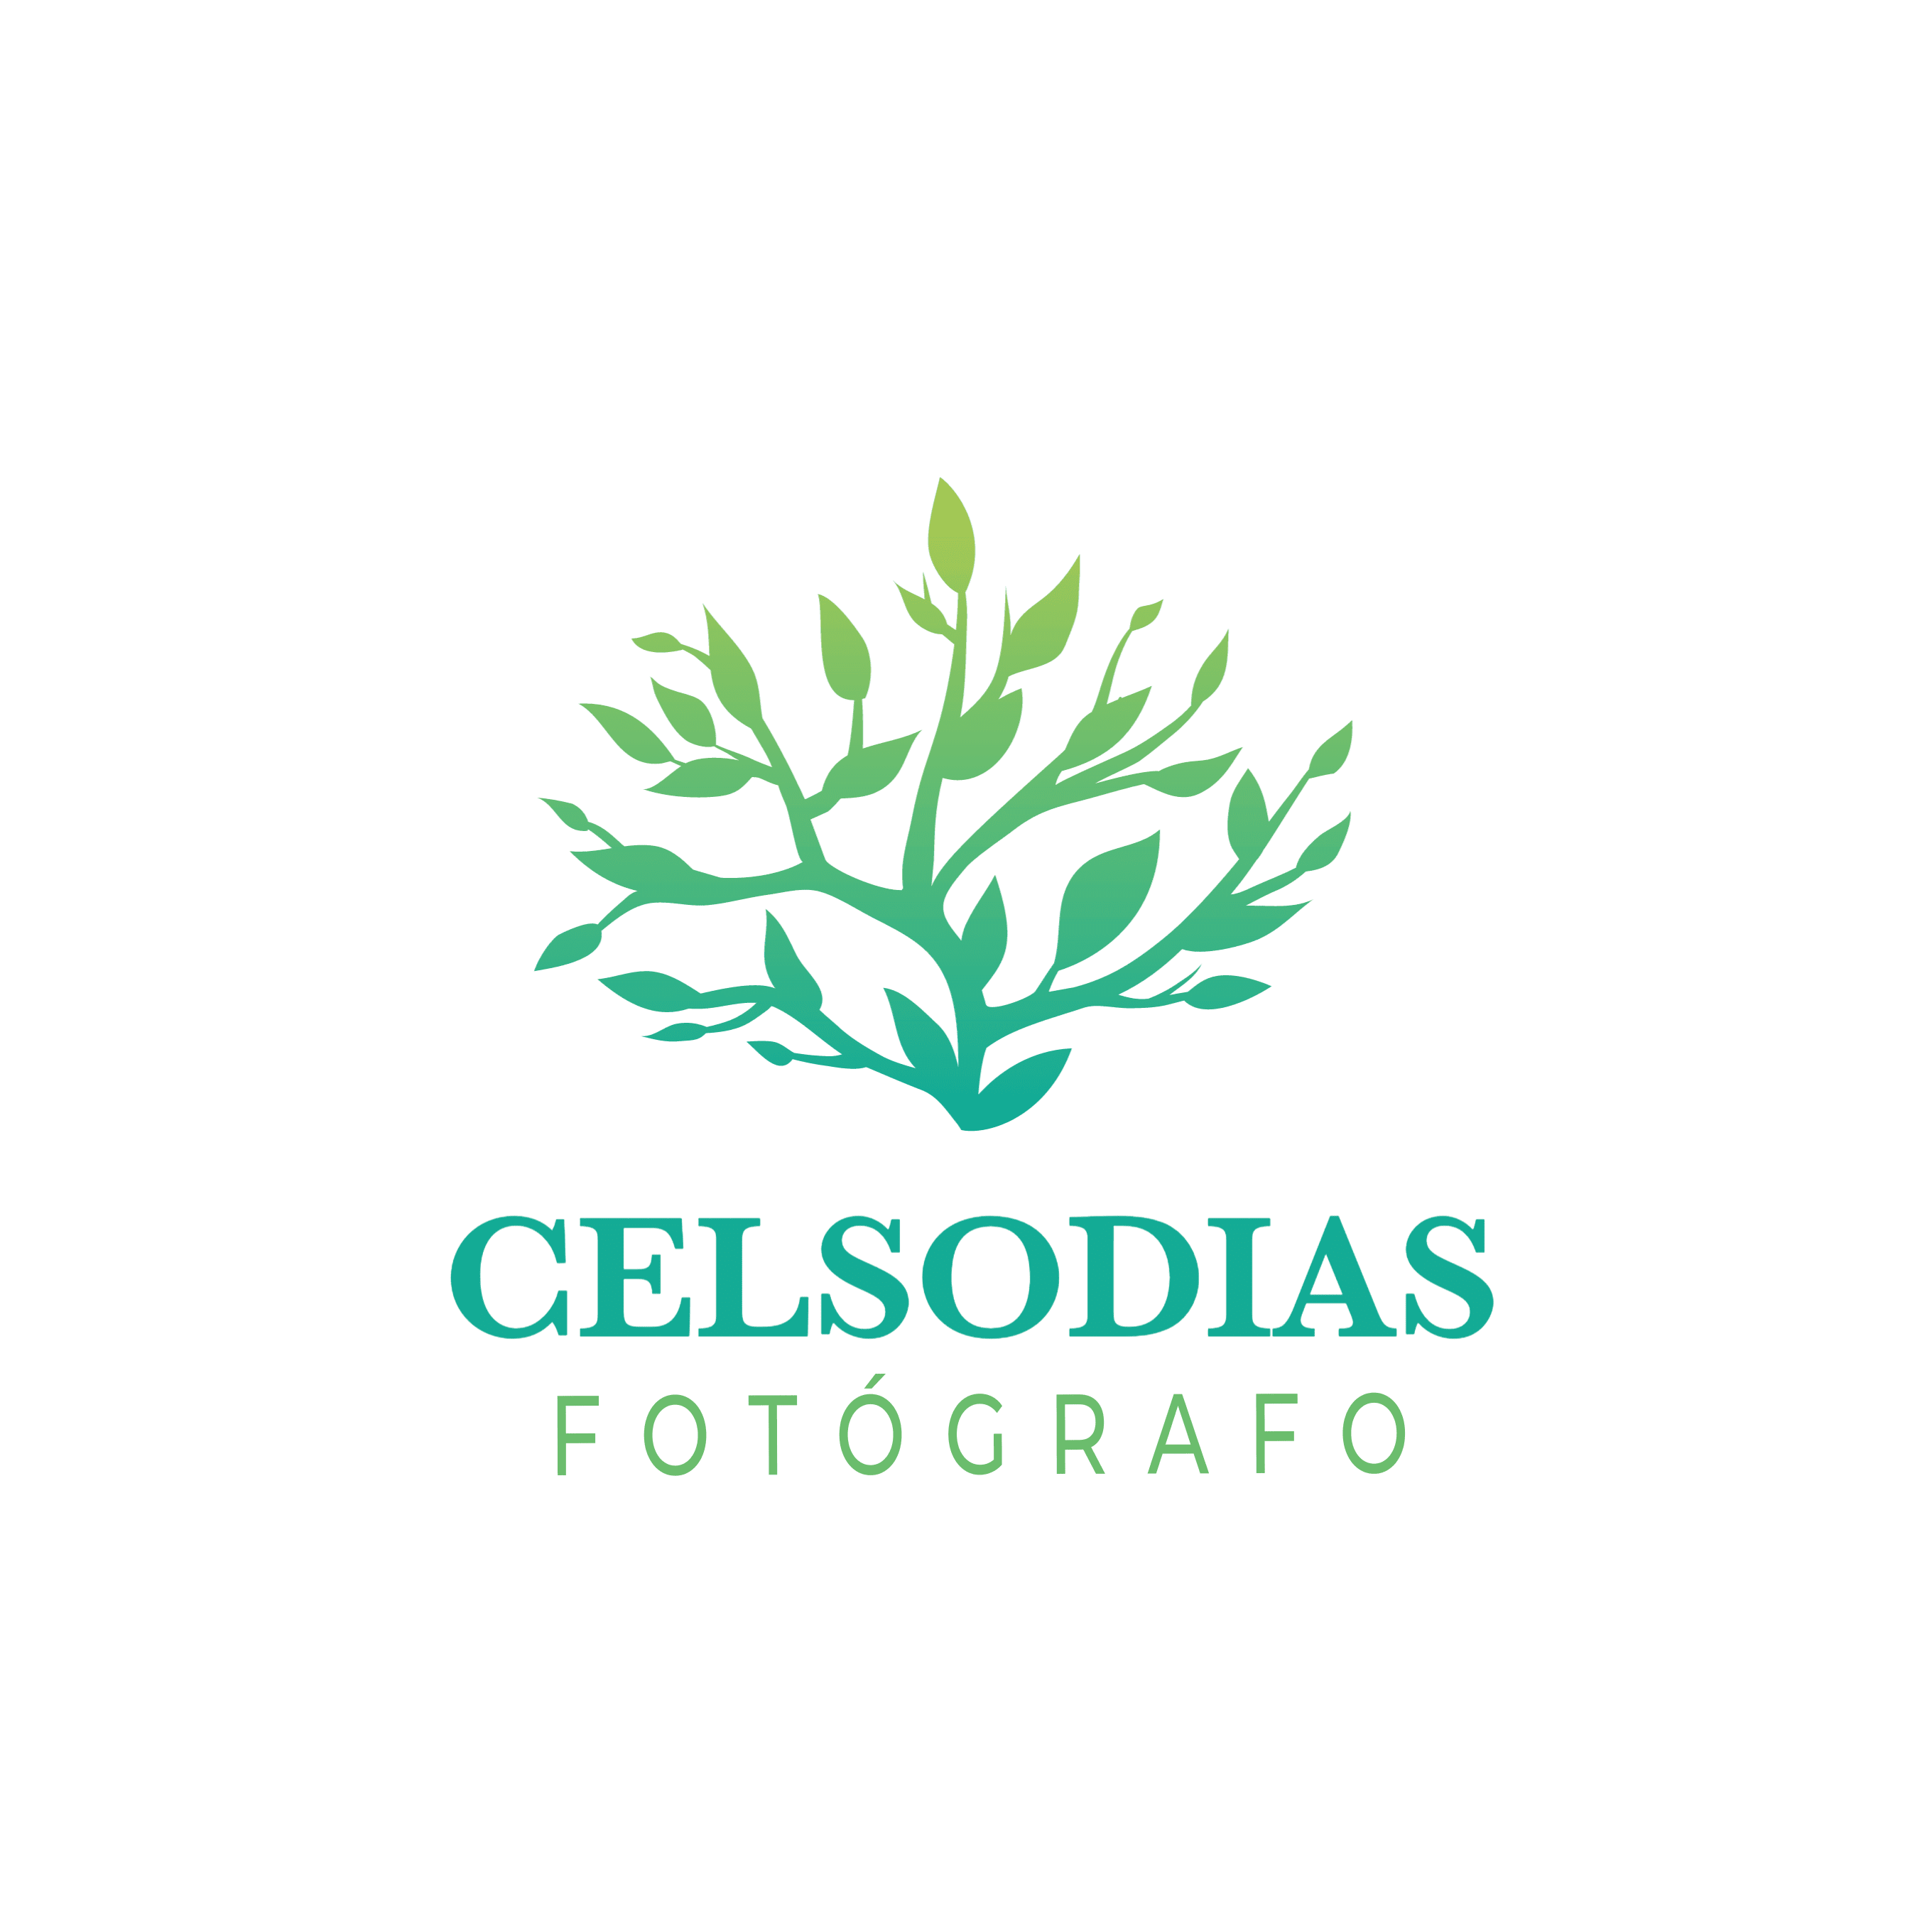 Celso Cascavel Fotografia